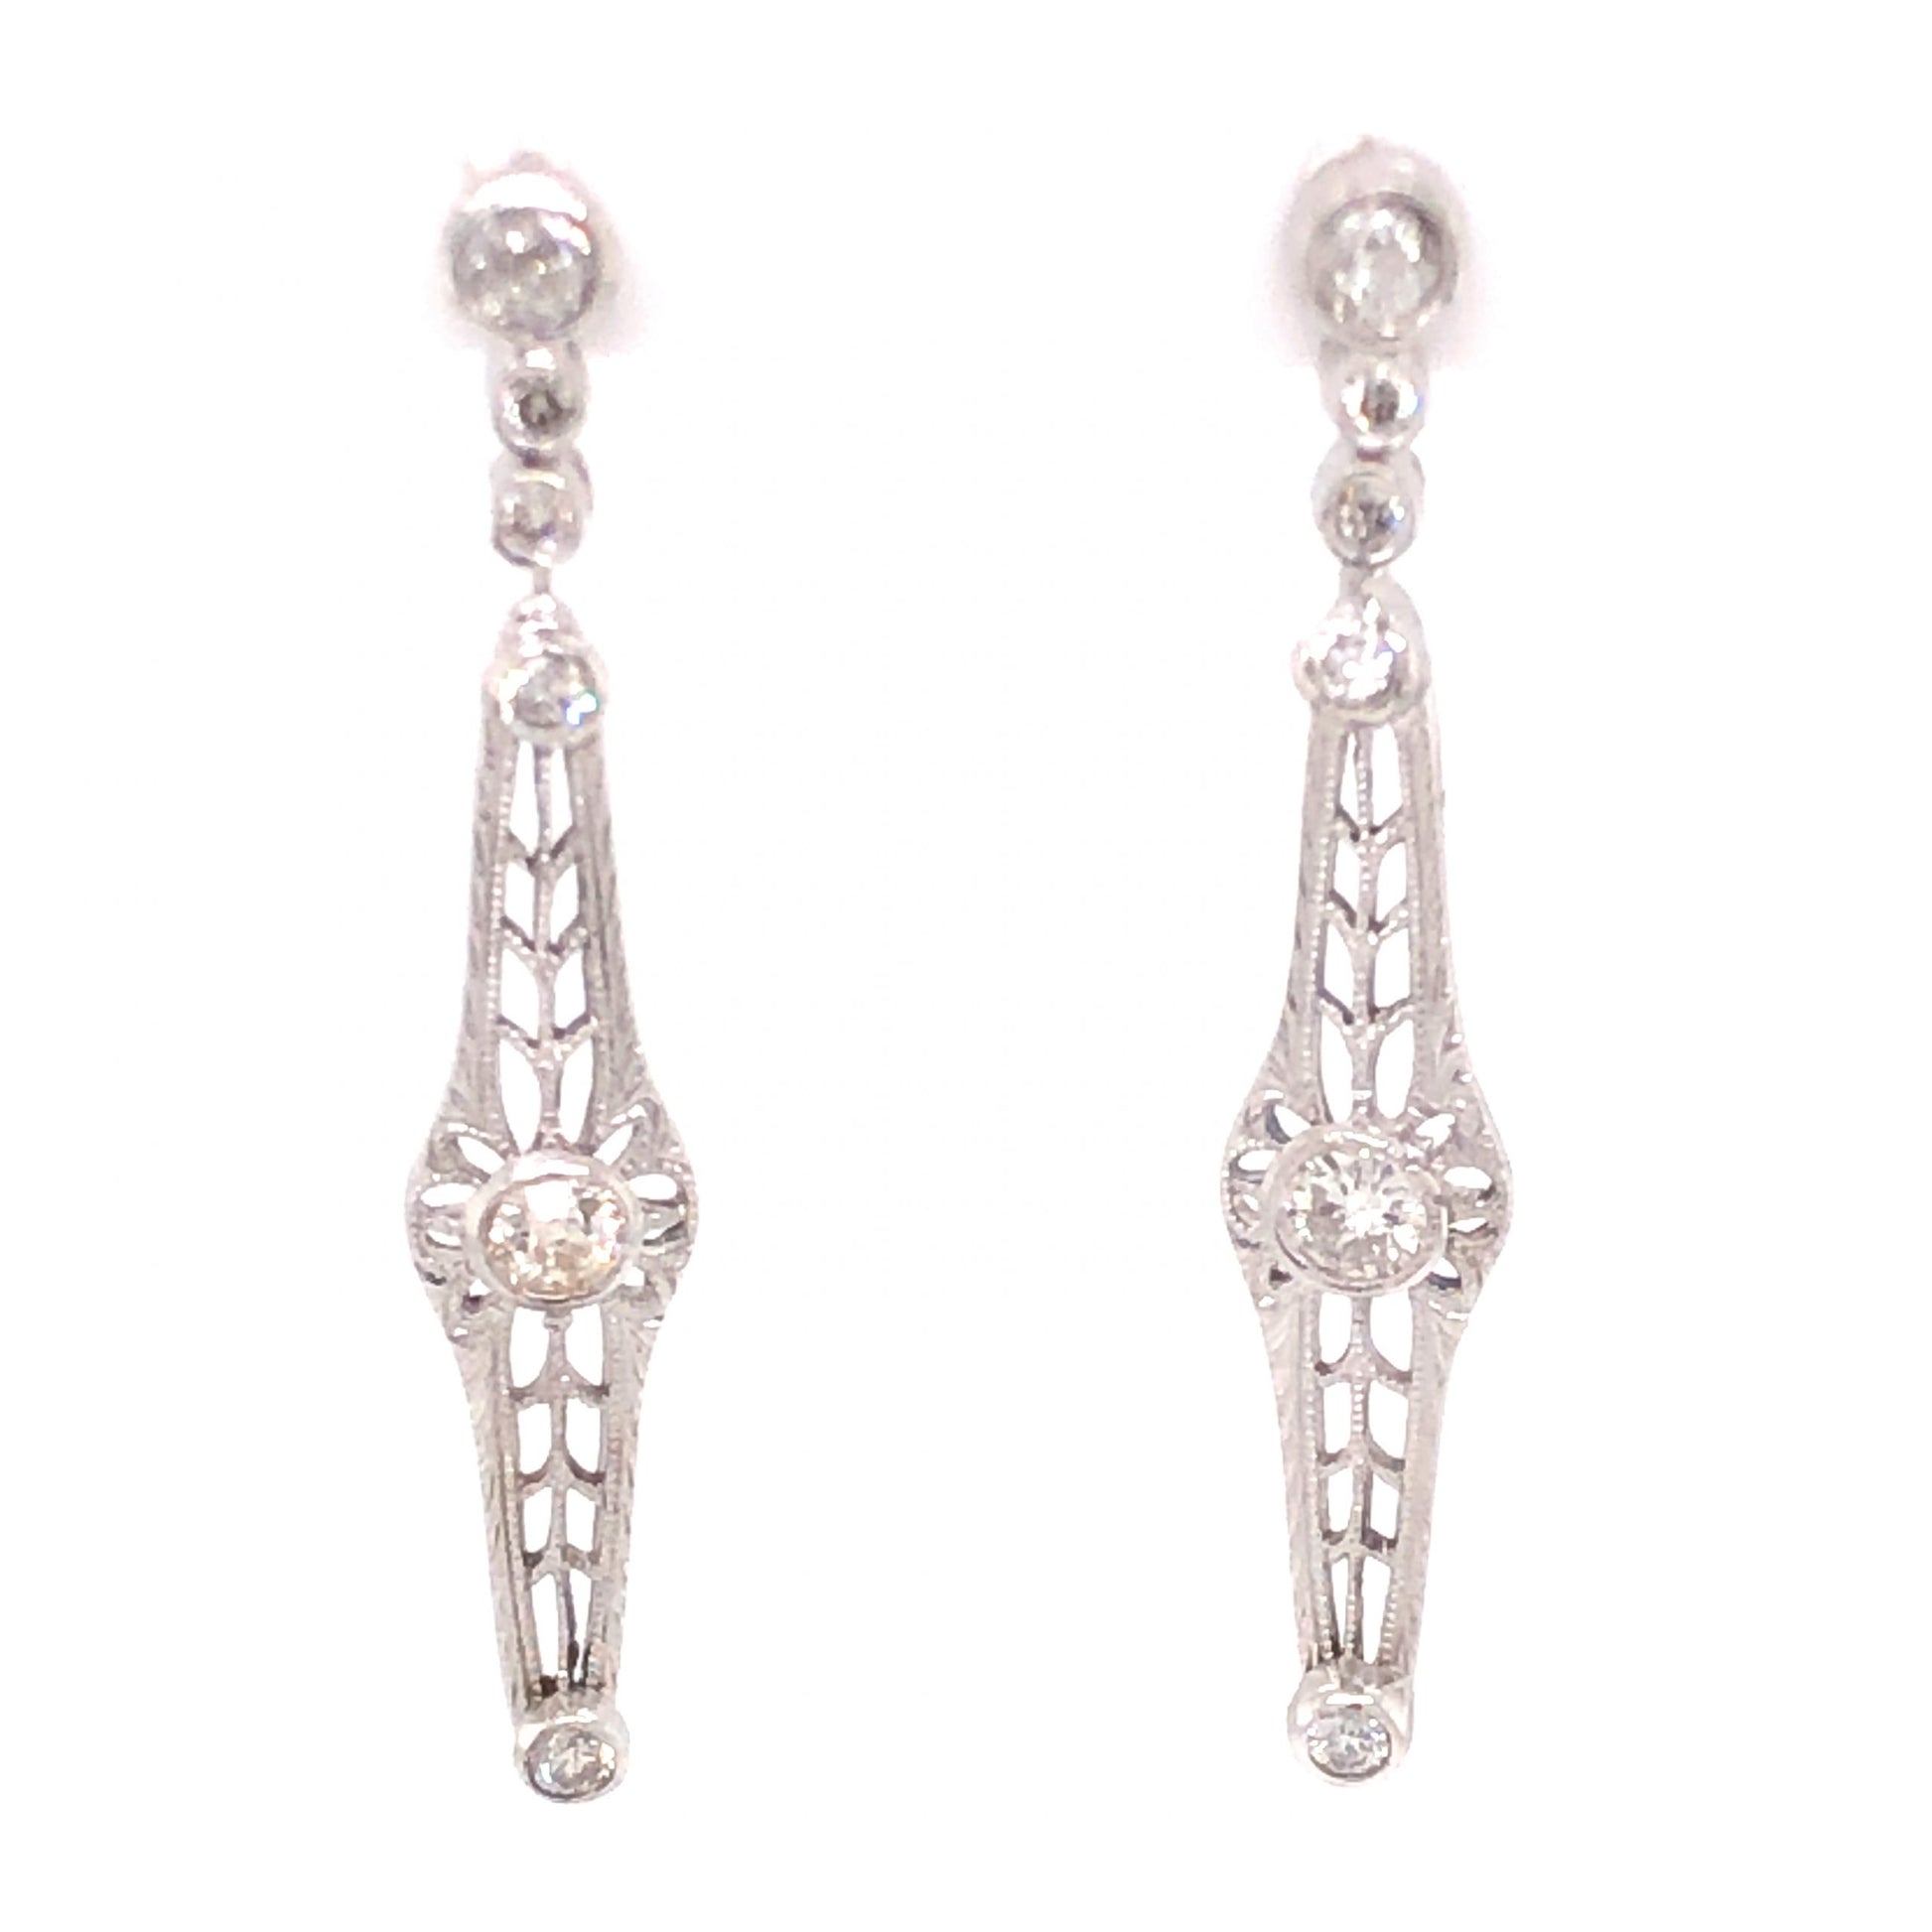 .78 Art Deco Diamond Earrings in 14k White GoldComposition: PlatinumTotal Diamond Weight: .78 ctTotal Gram Weight: 2.8 g